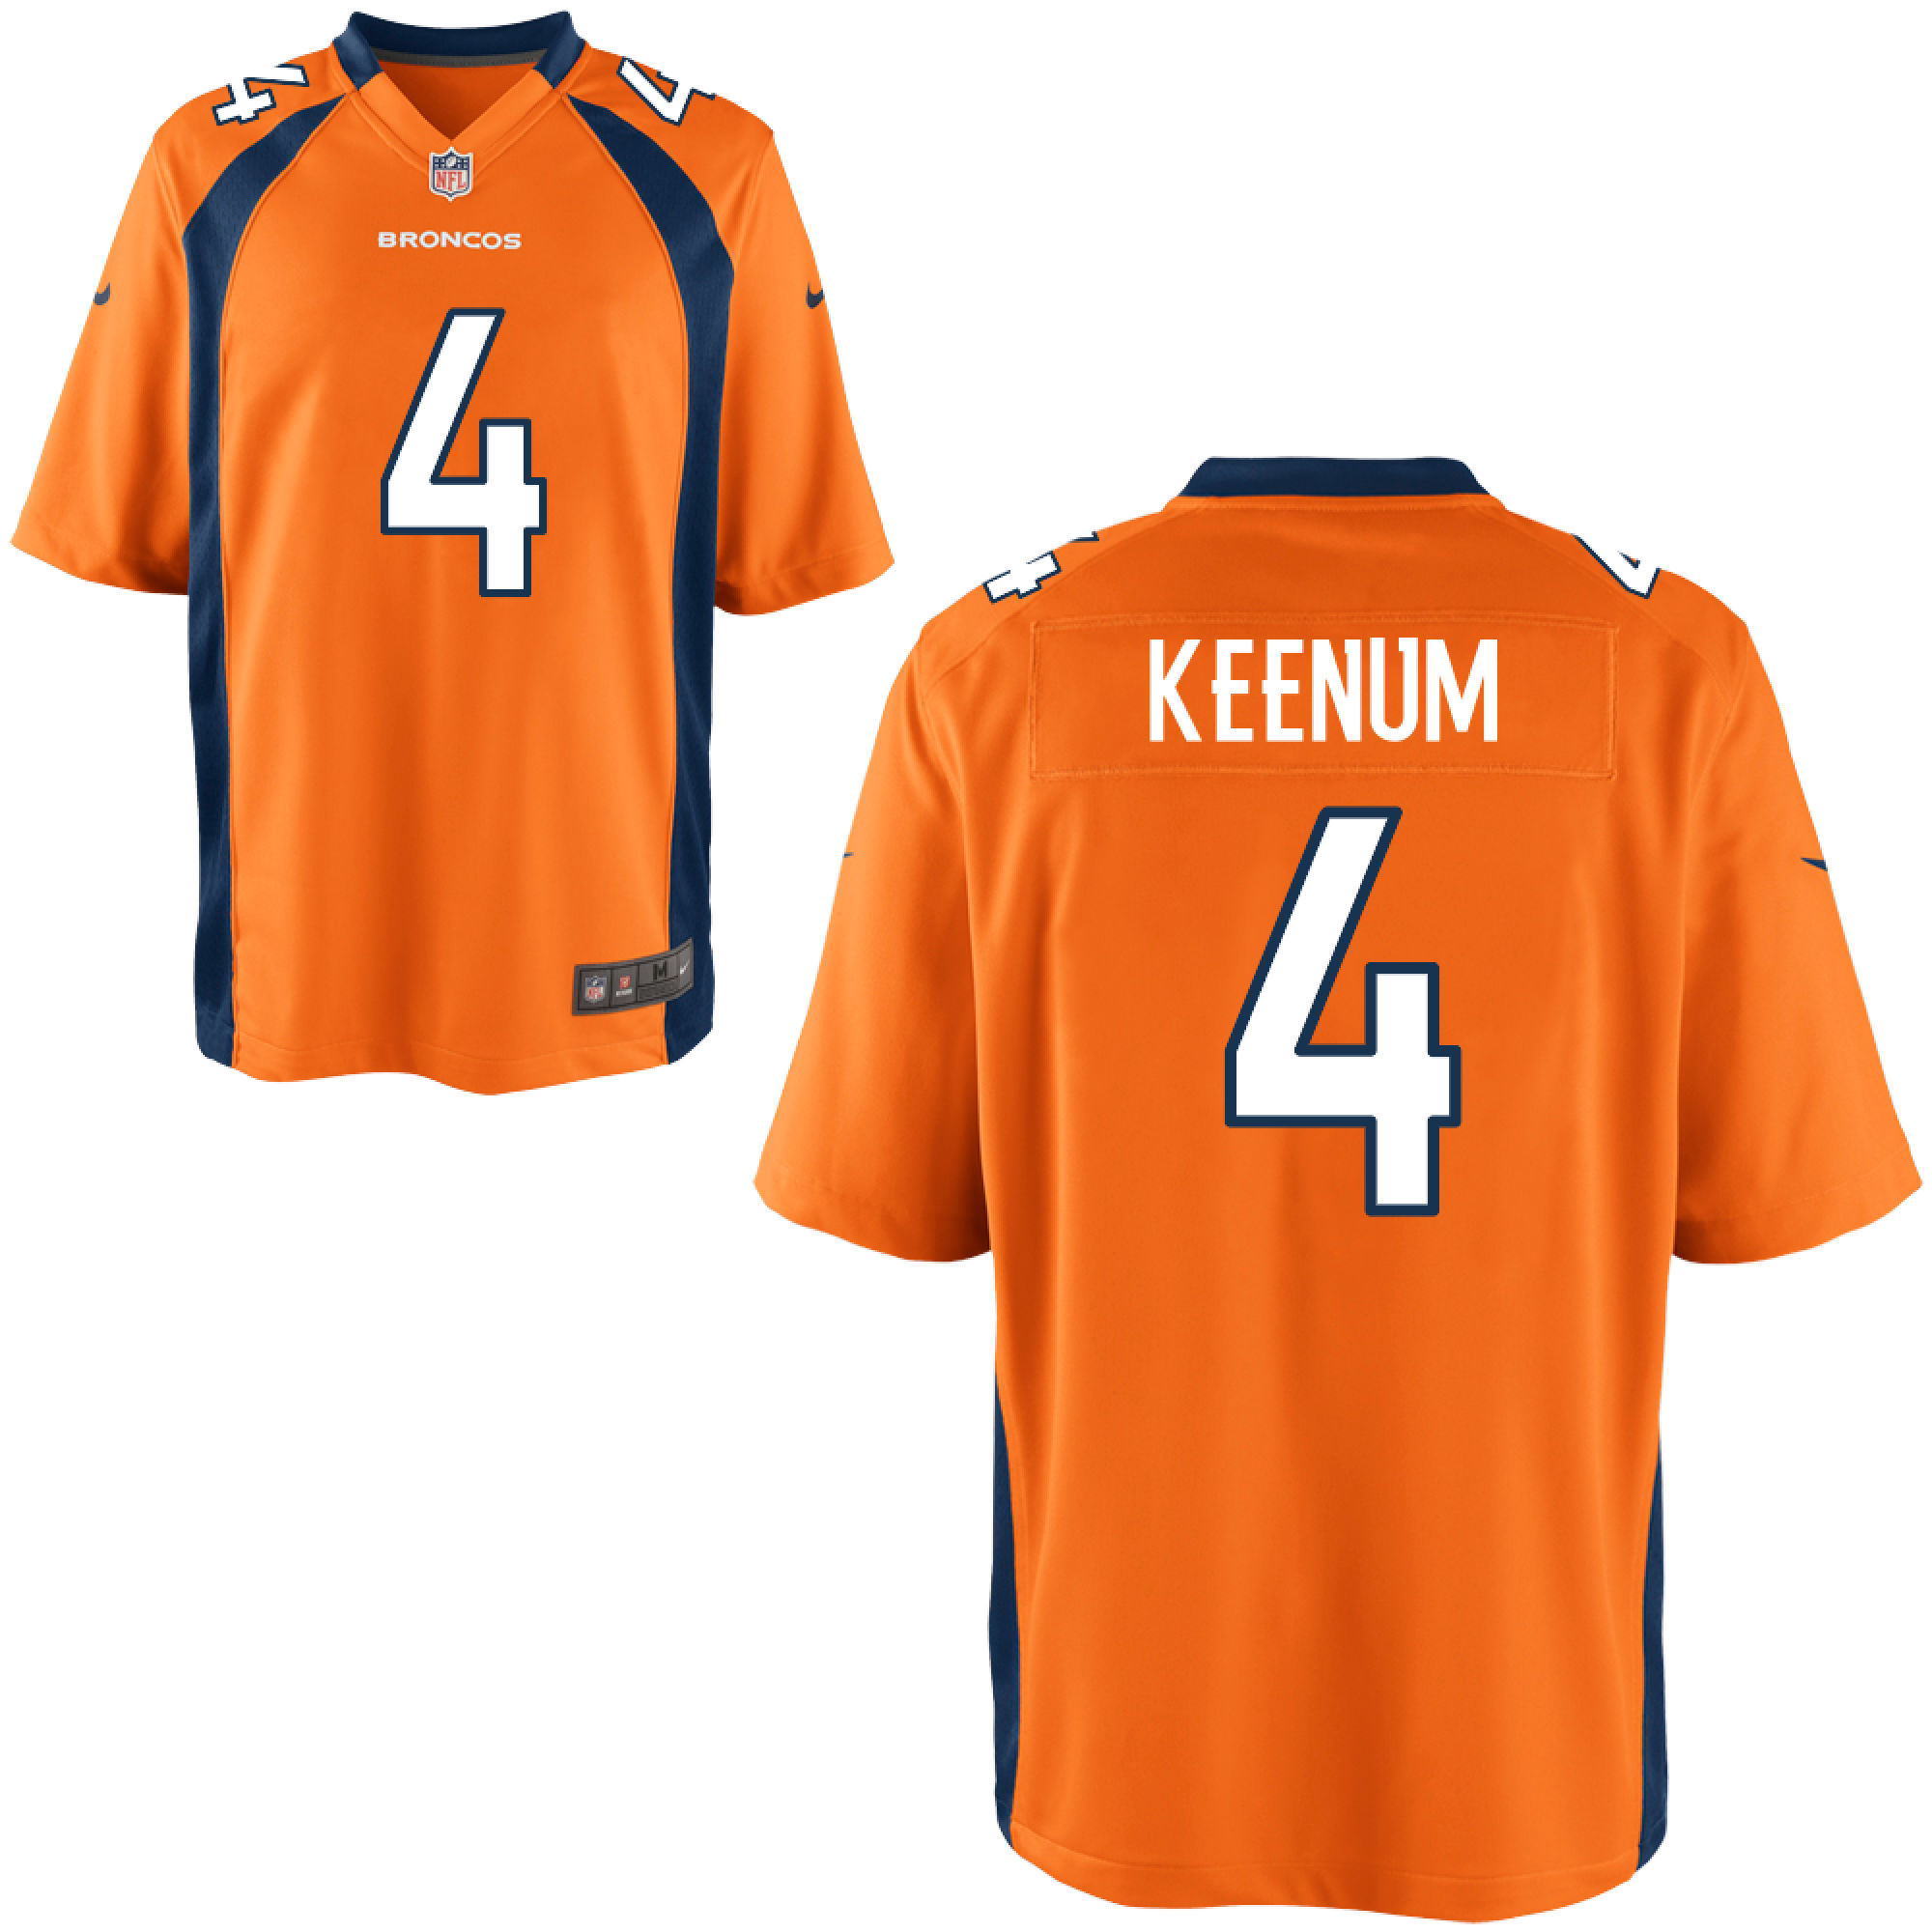 Nike Broncos 4 Case Keenum Orange Elite Jersey